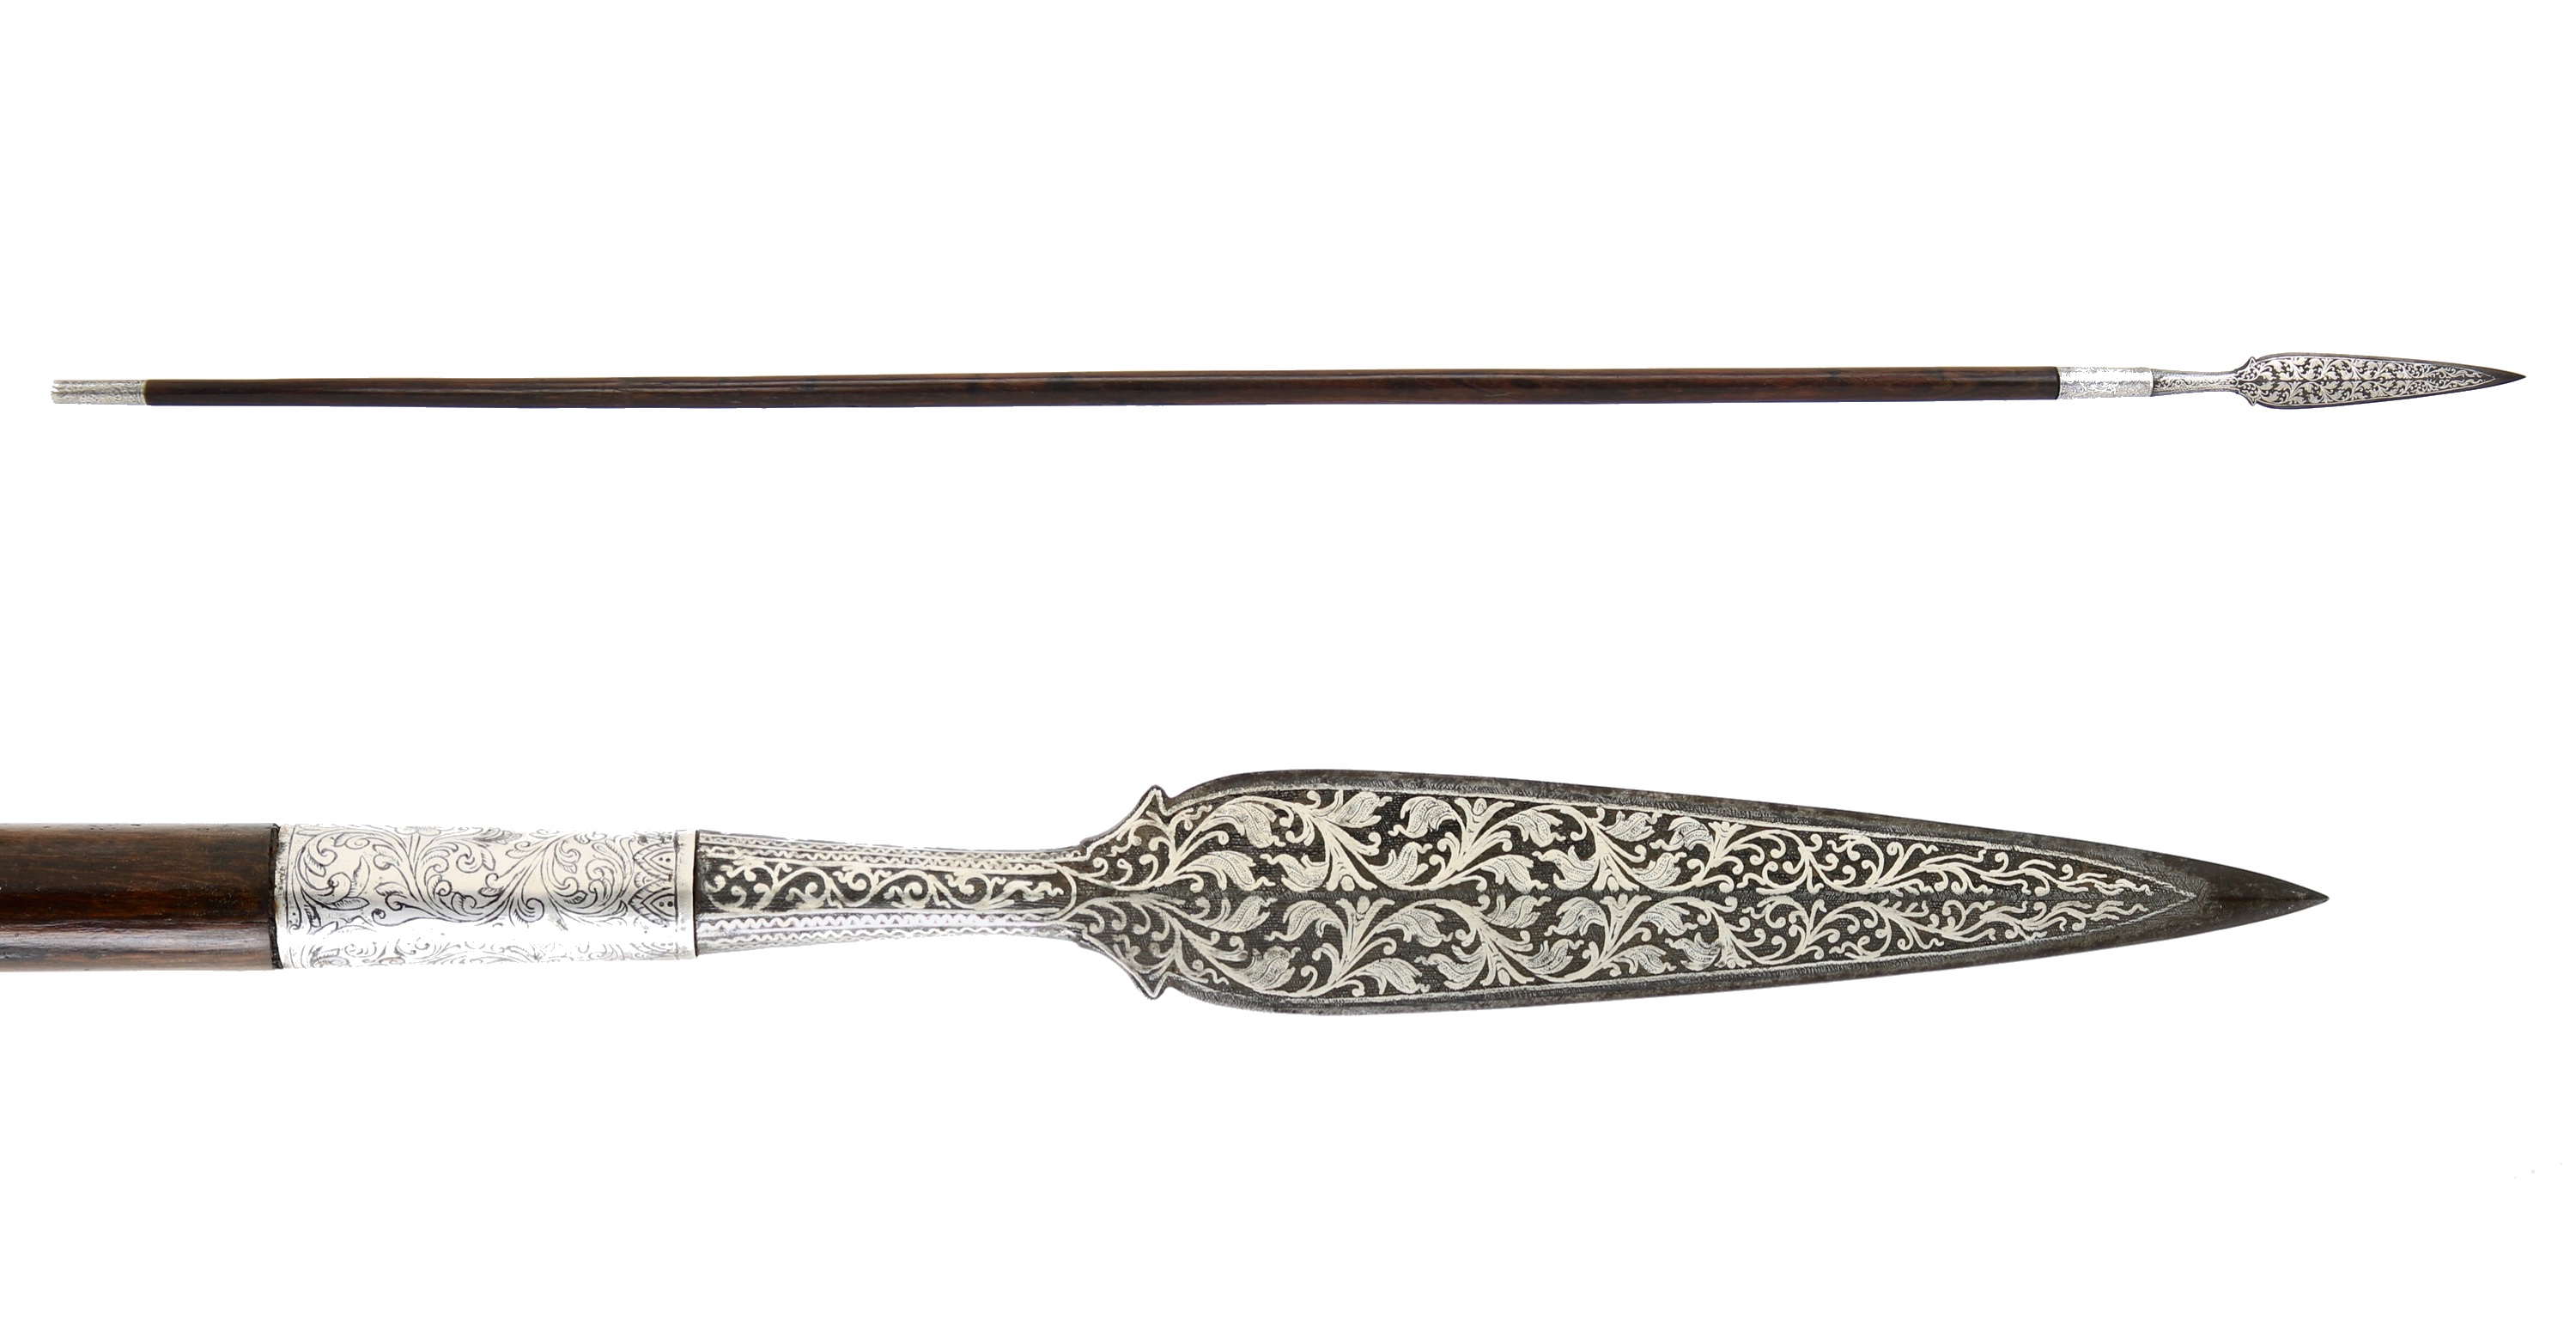 Burmese spear overall